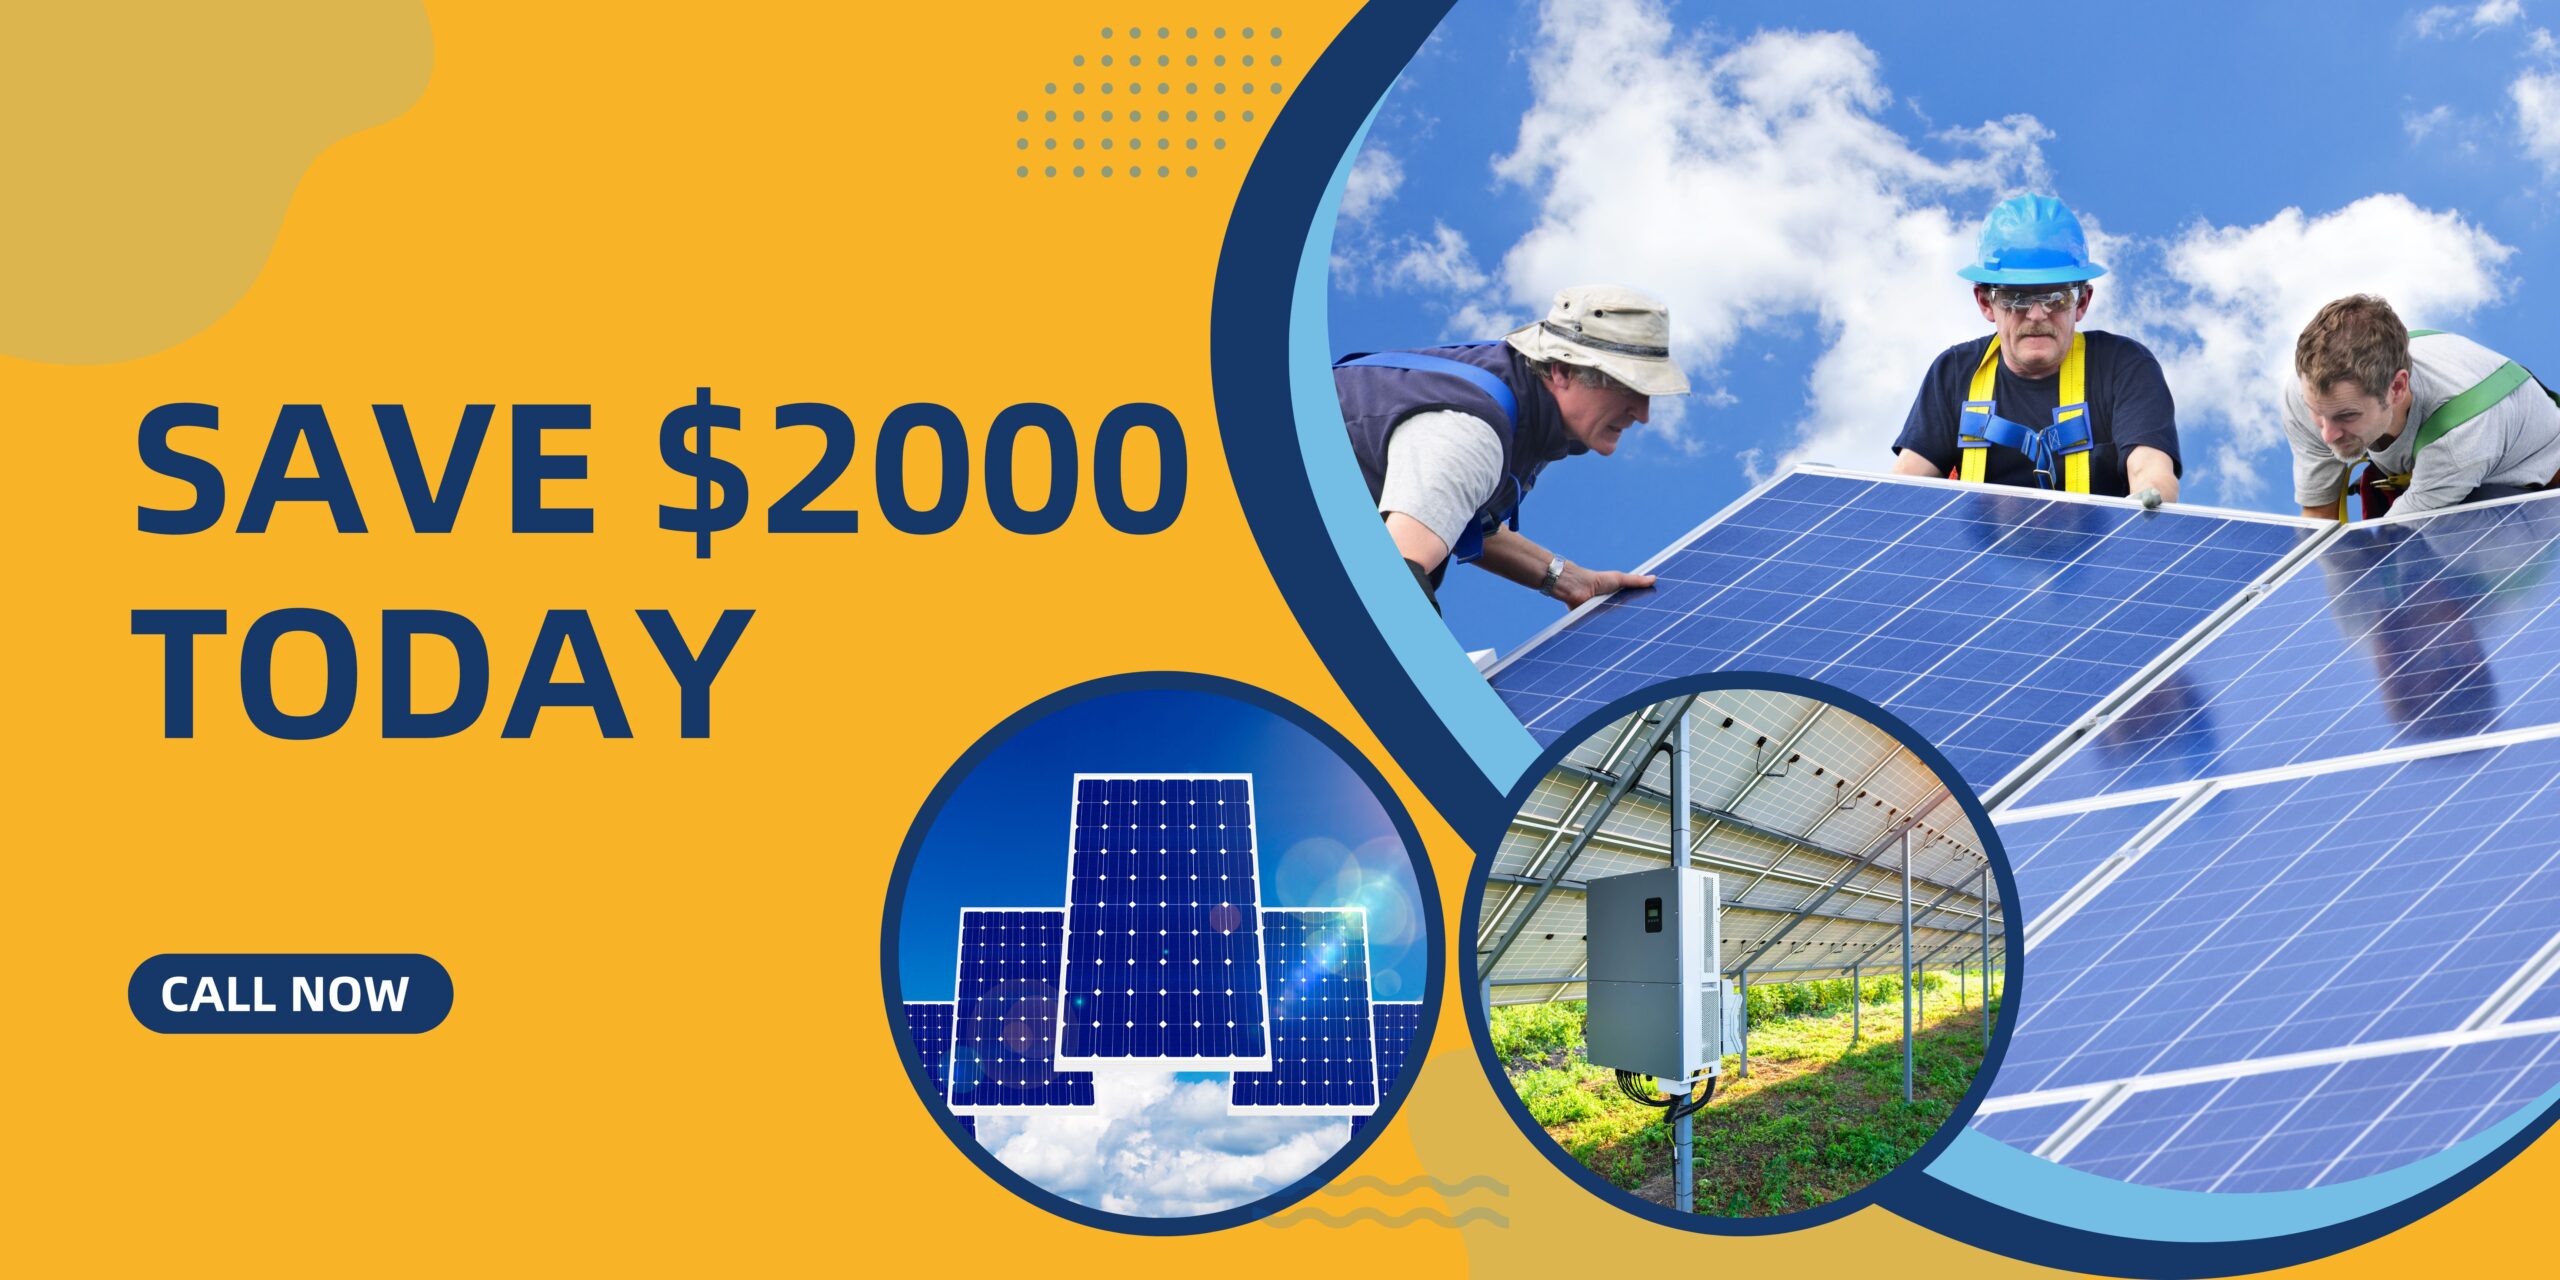 Save $2000 on solar panel installation